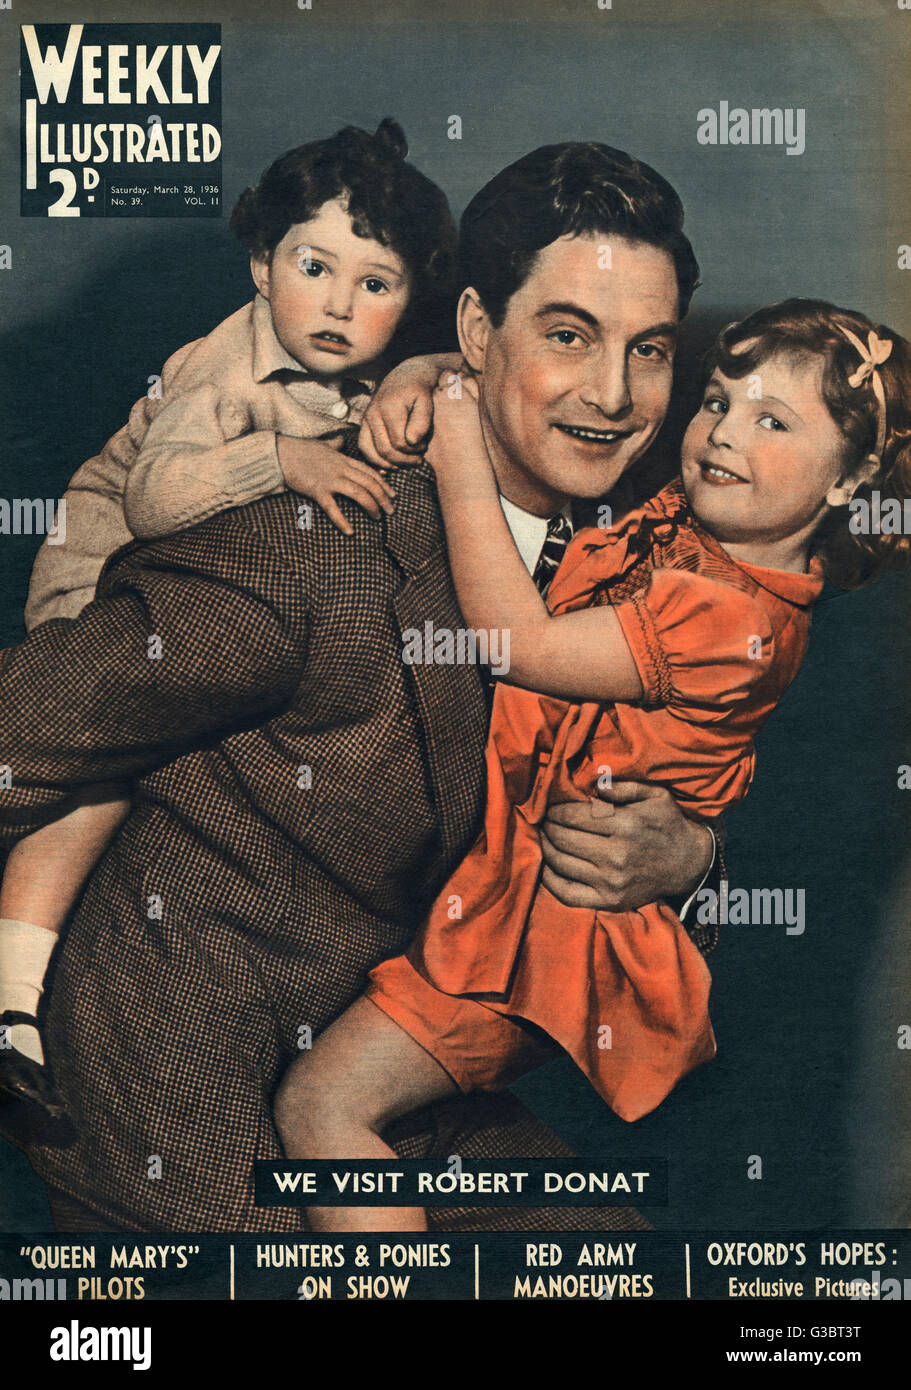 Robert Donat, actor inglés, y dos hijos Foto de stock